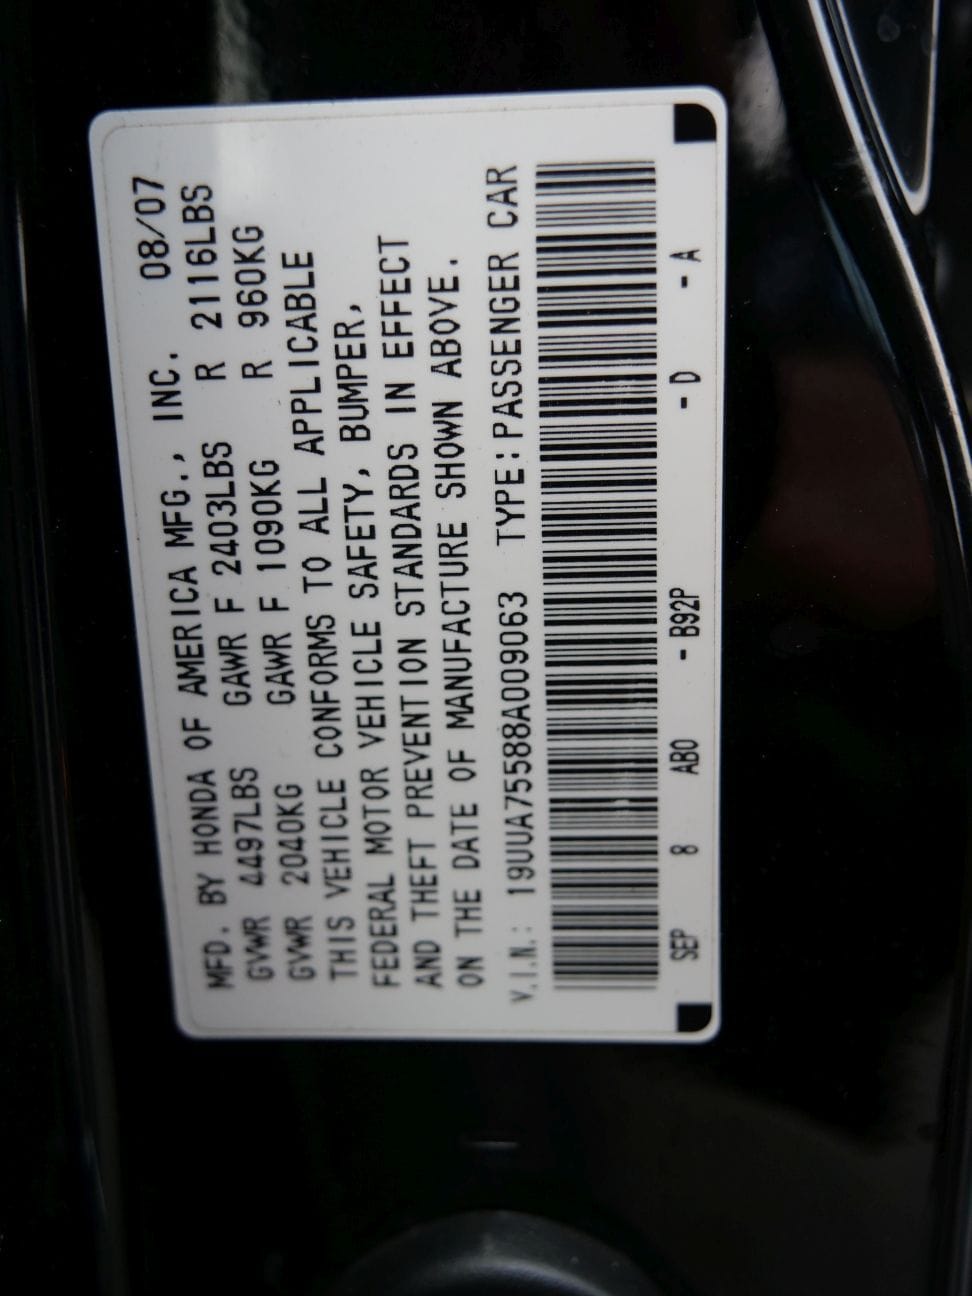 2008 Acura TL - FS: 2008 Acura TL Type S, 6MT, NBP ext, Silver/Ebony int,  85k miles, stock (no mods) - Used - VIN 19UUA75588A009063 - 85,500 Miles - 6 cyl - 2WD - Manual - Sedan - Black - Torrance, CA 90503, United States